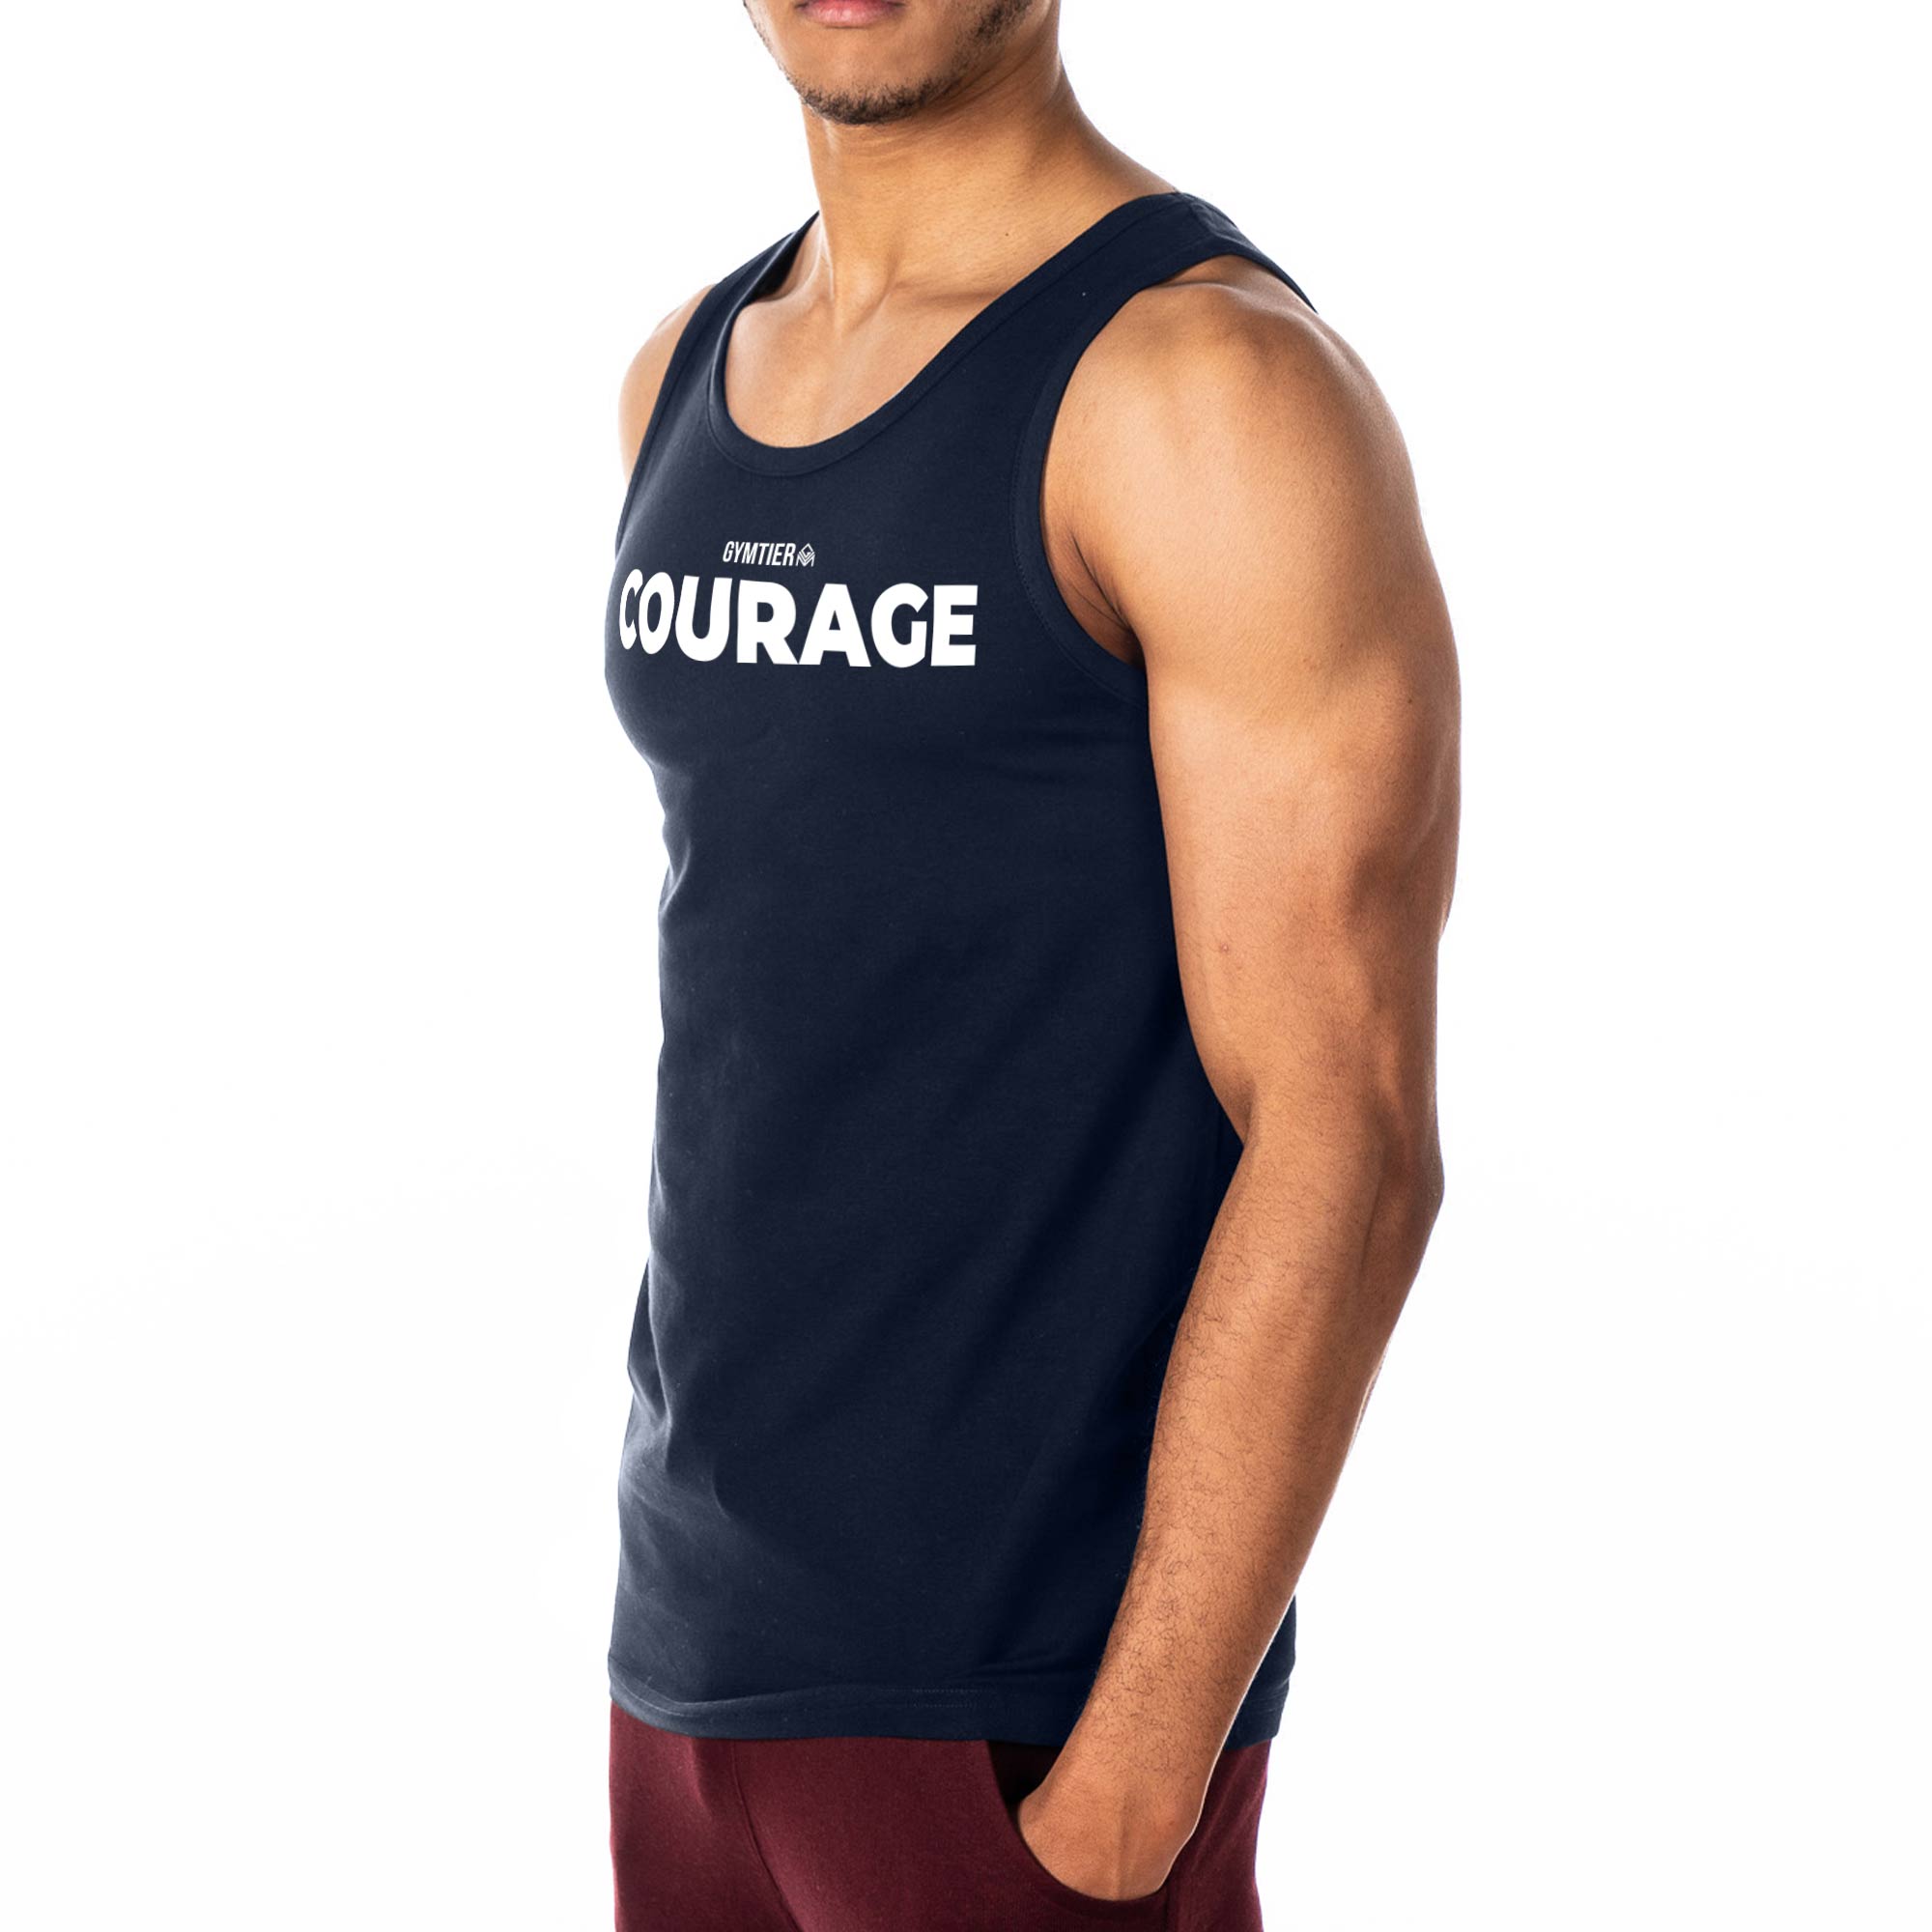 GYMTIER Courage Gym Vest